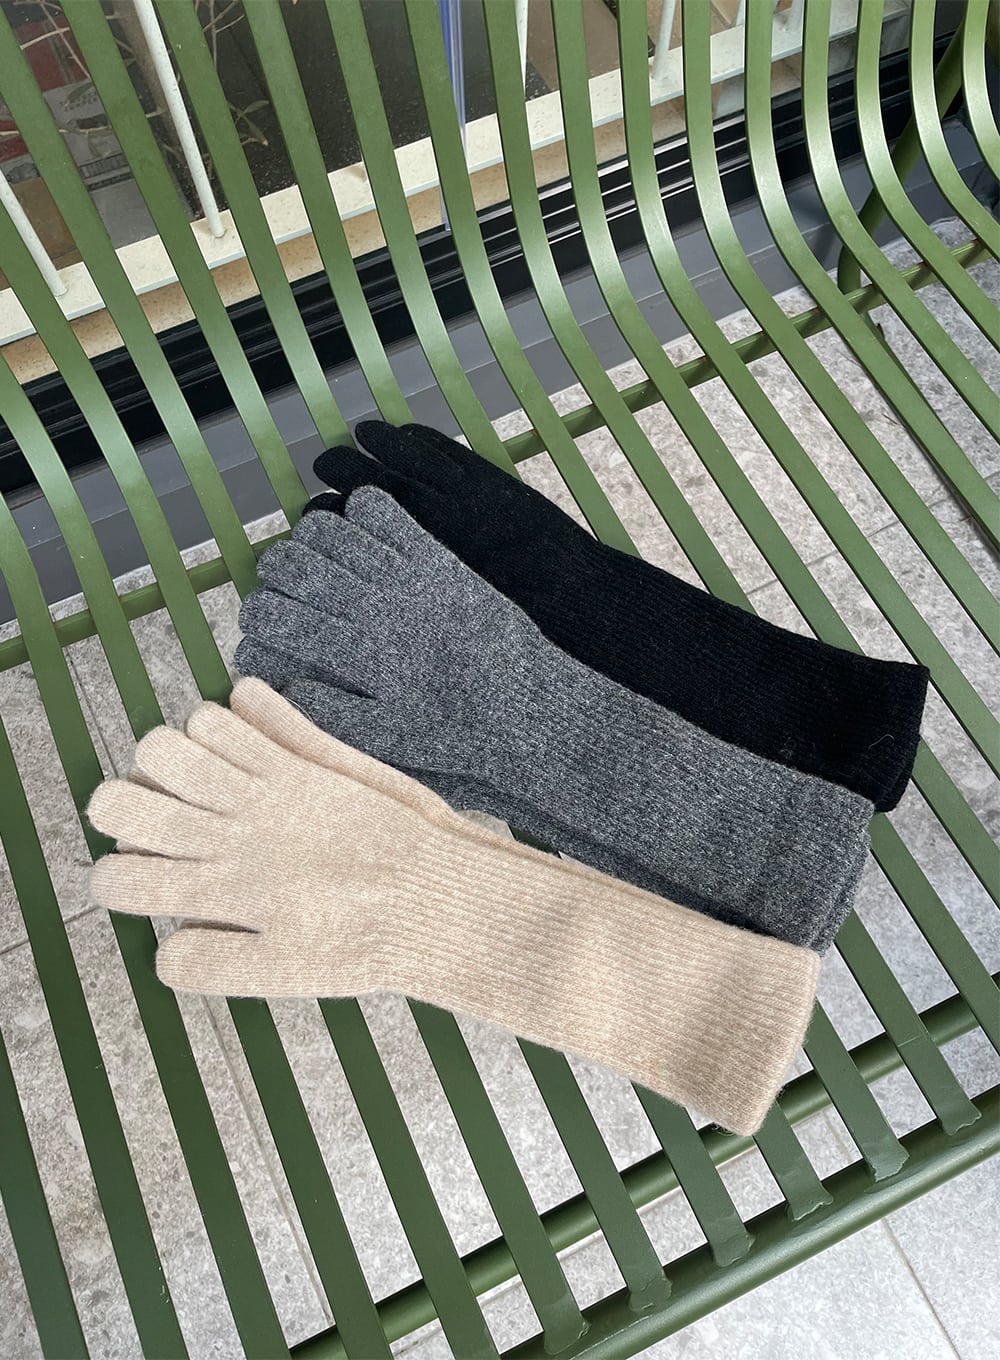 Long Knit Gloves CN18